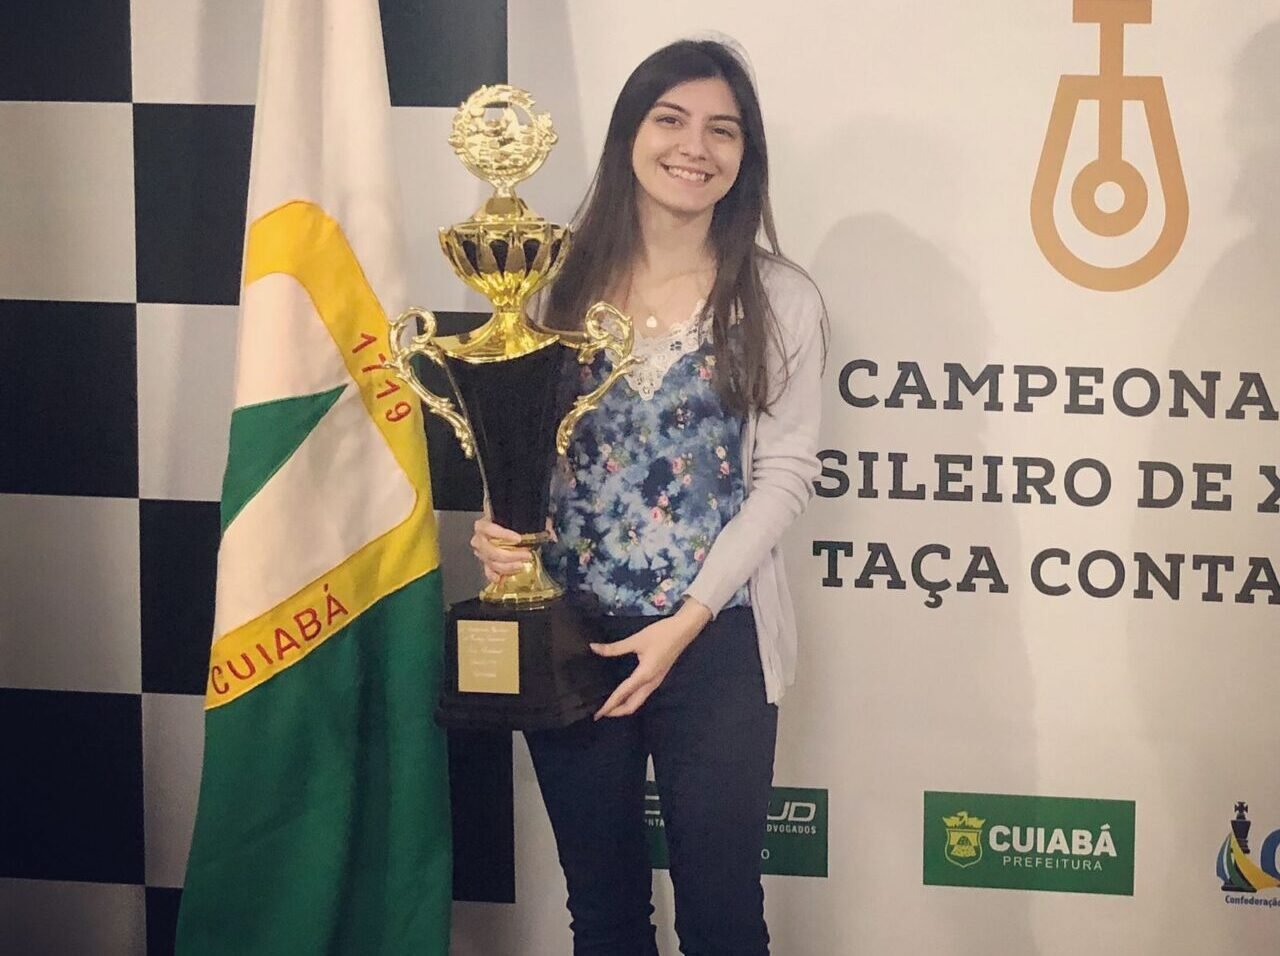 Em solo acreano, Paulista conquista título de Grande Mestre de Xadrez, ac